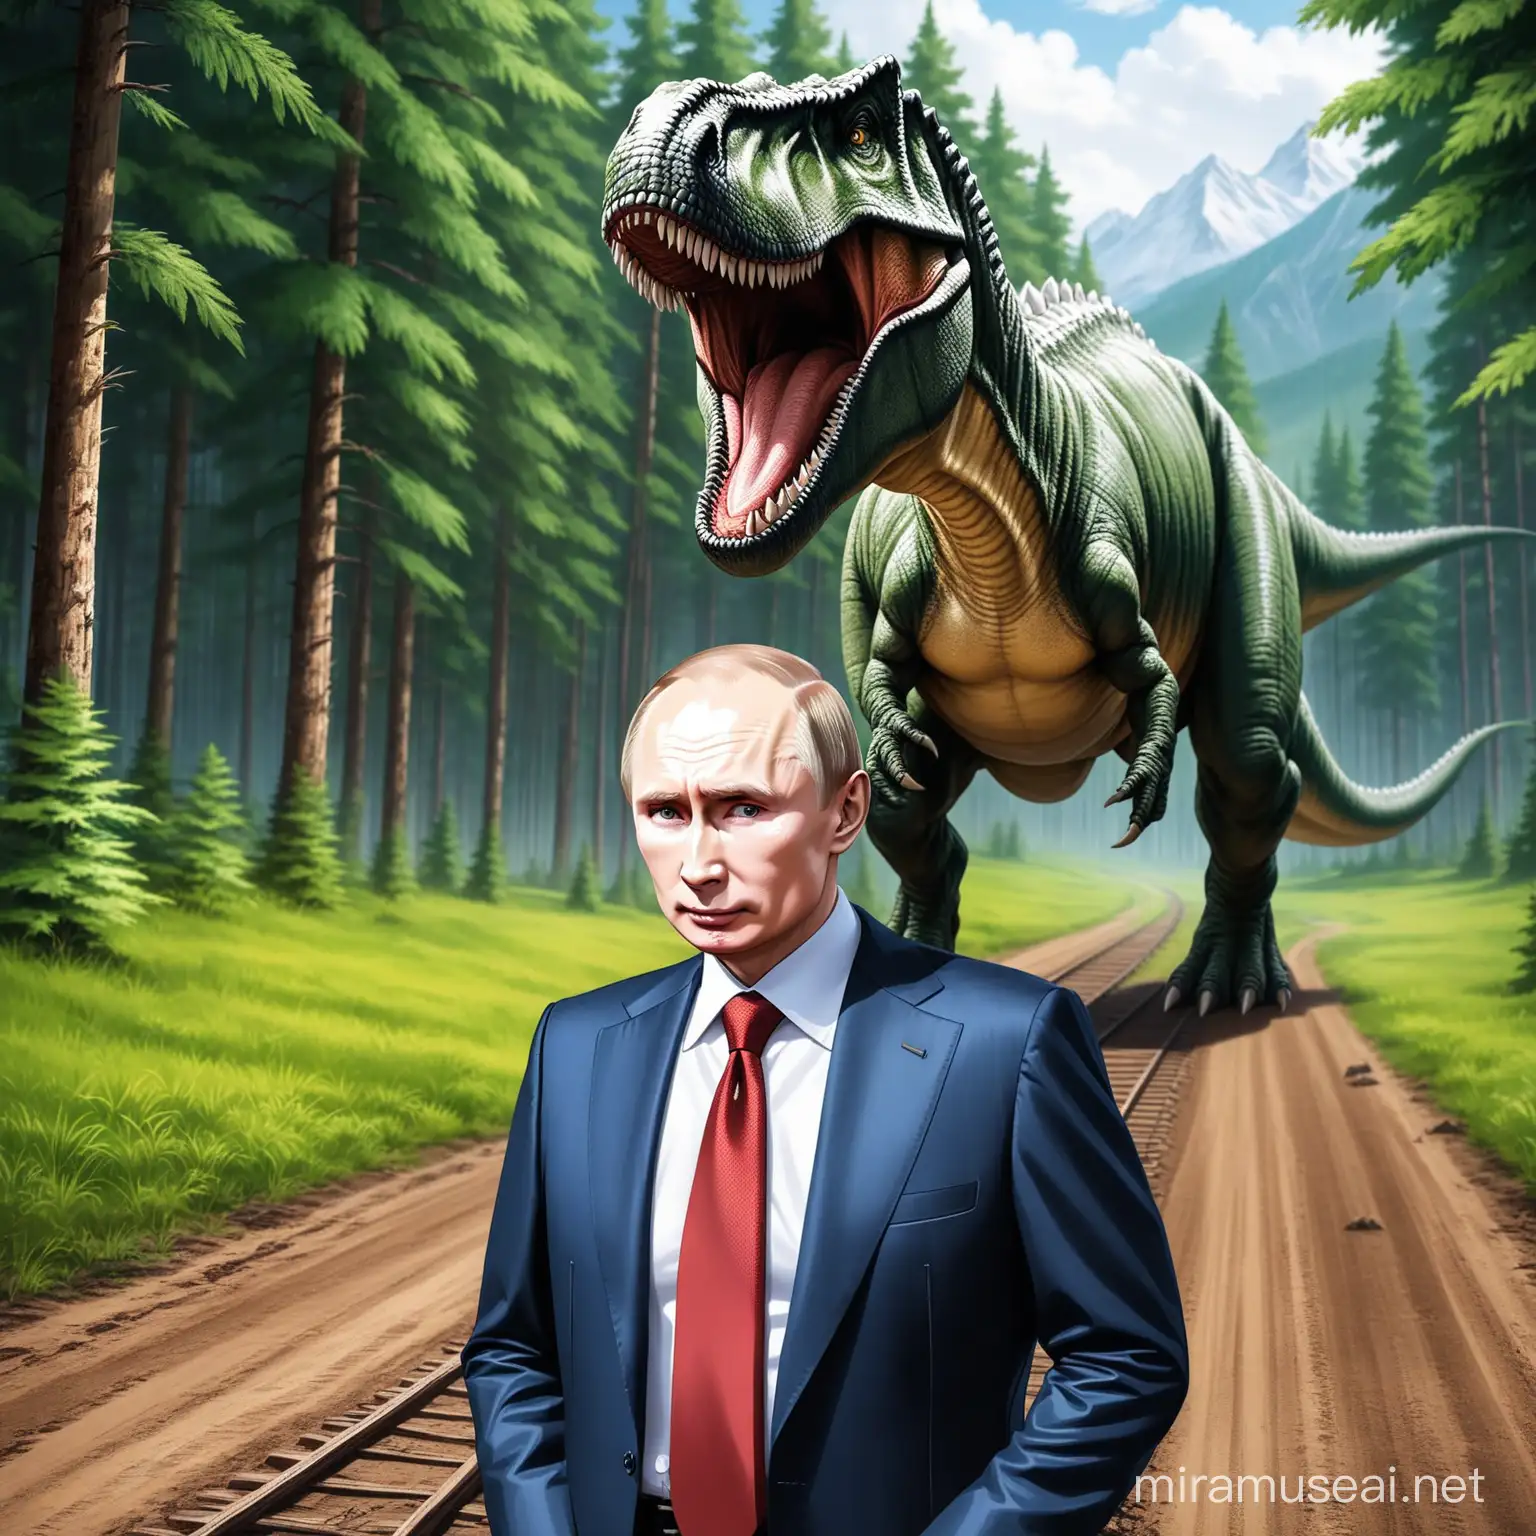 65YearOld Putin in Russia Attire Evading Tyrannosaurus Rex in Prehistoric Grassland